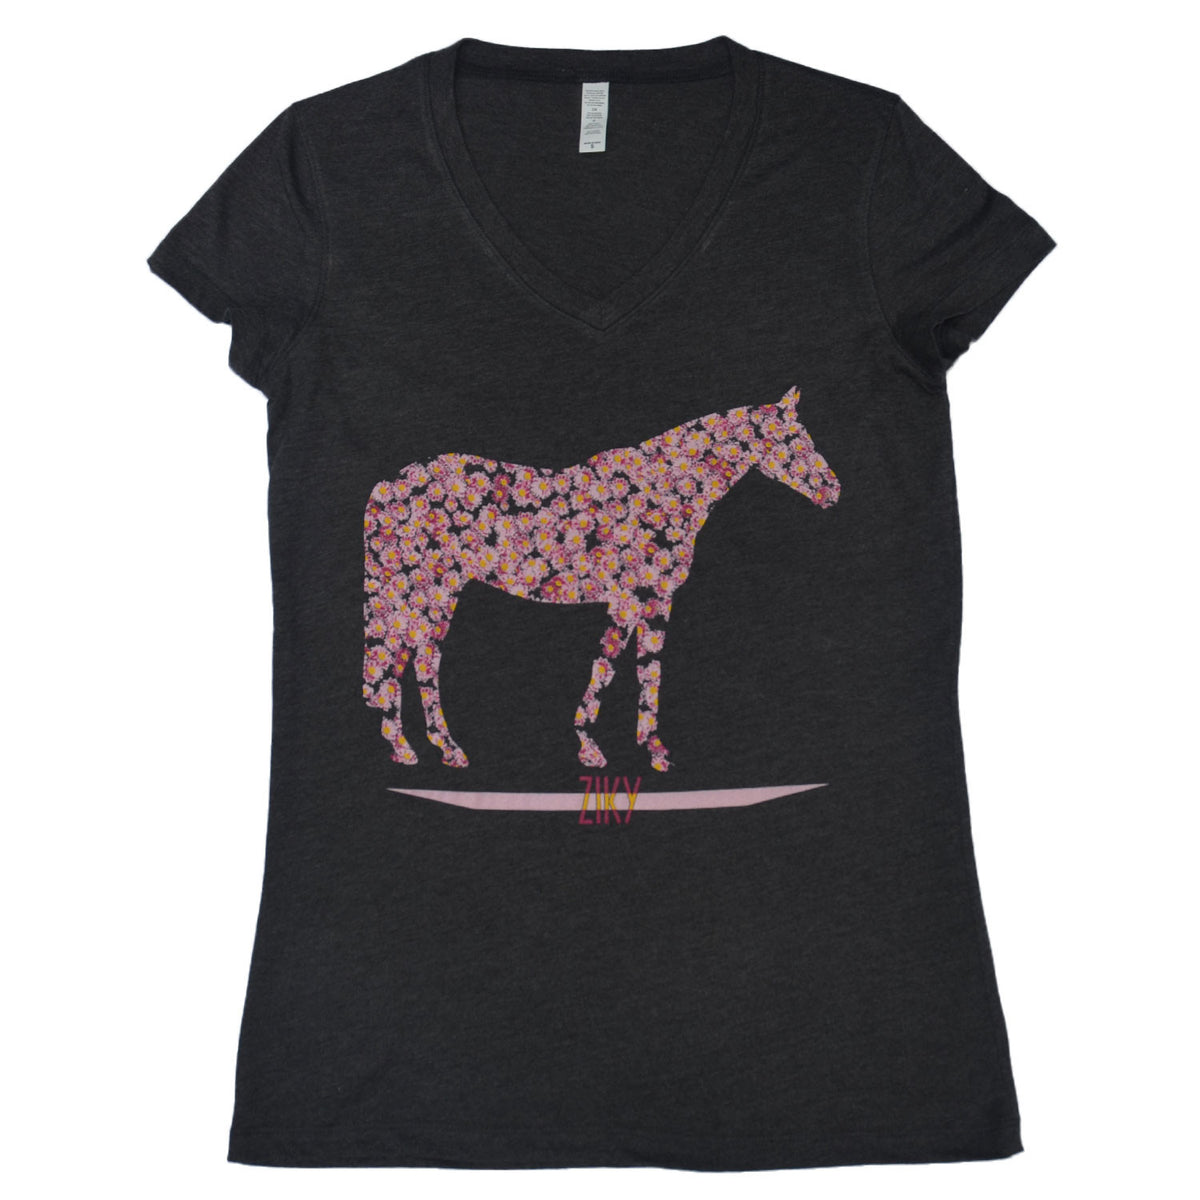 Equestrian shirt